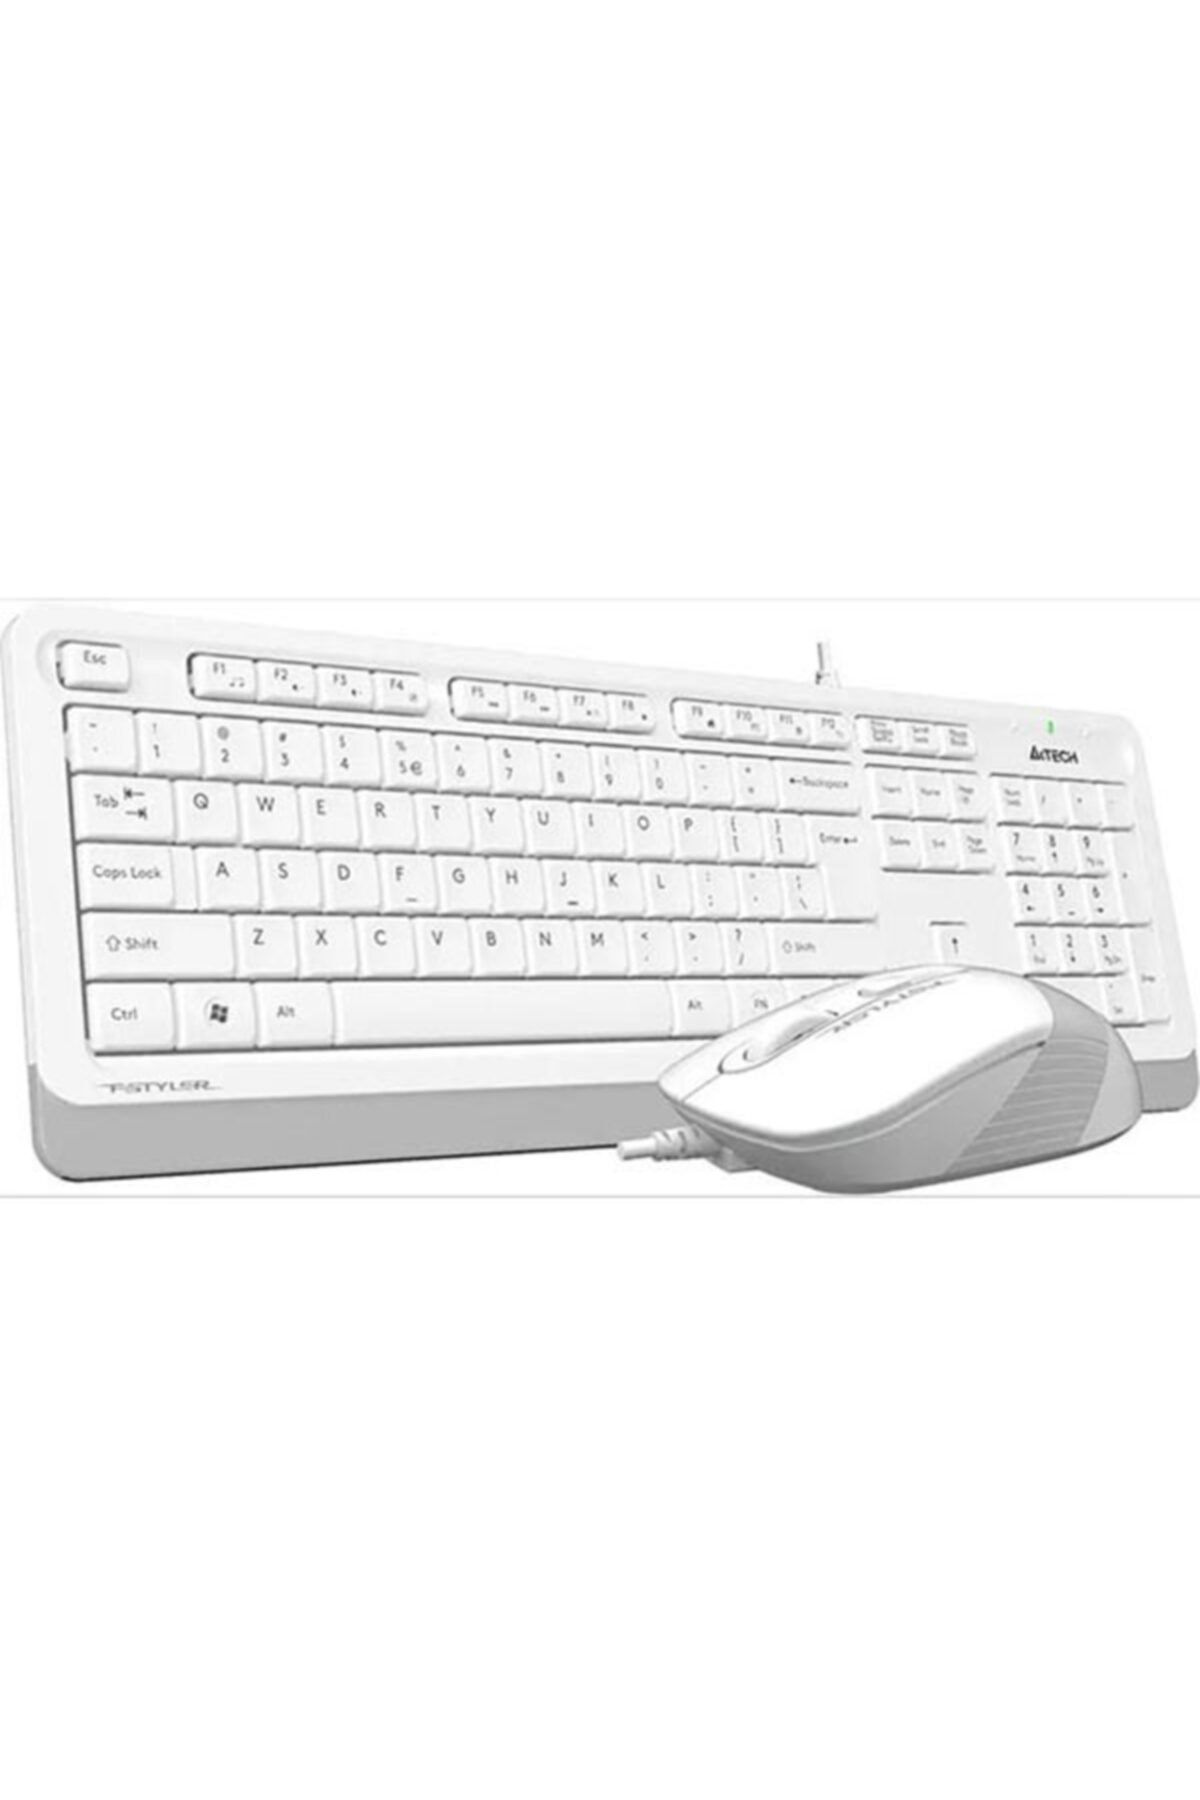 A4 Tech F1010 Beyaz Fstyler Usb Kablolu Türkçe M Medya Klavye Mouse Set